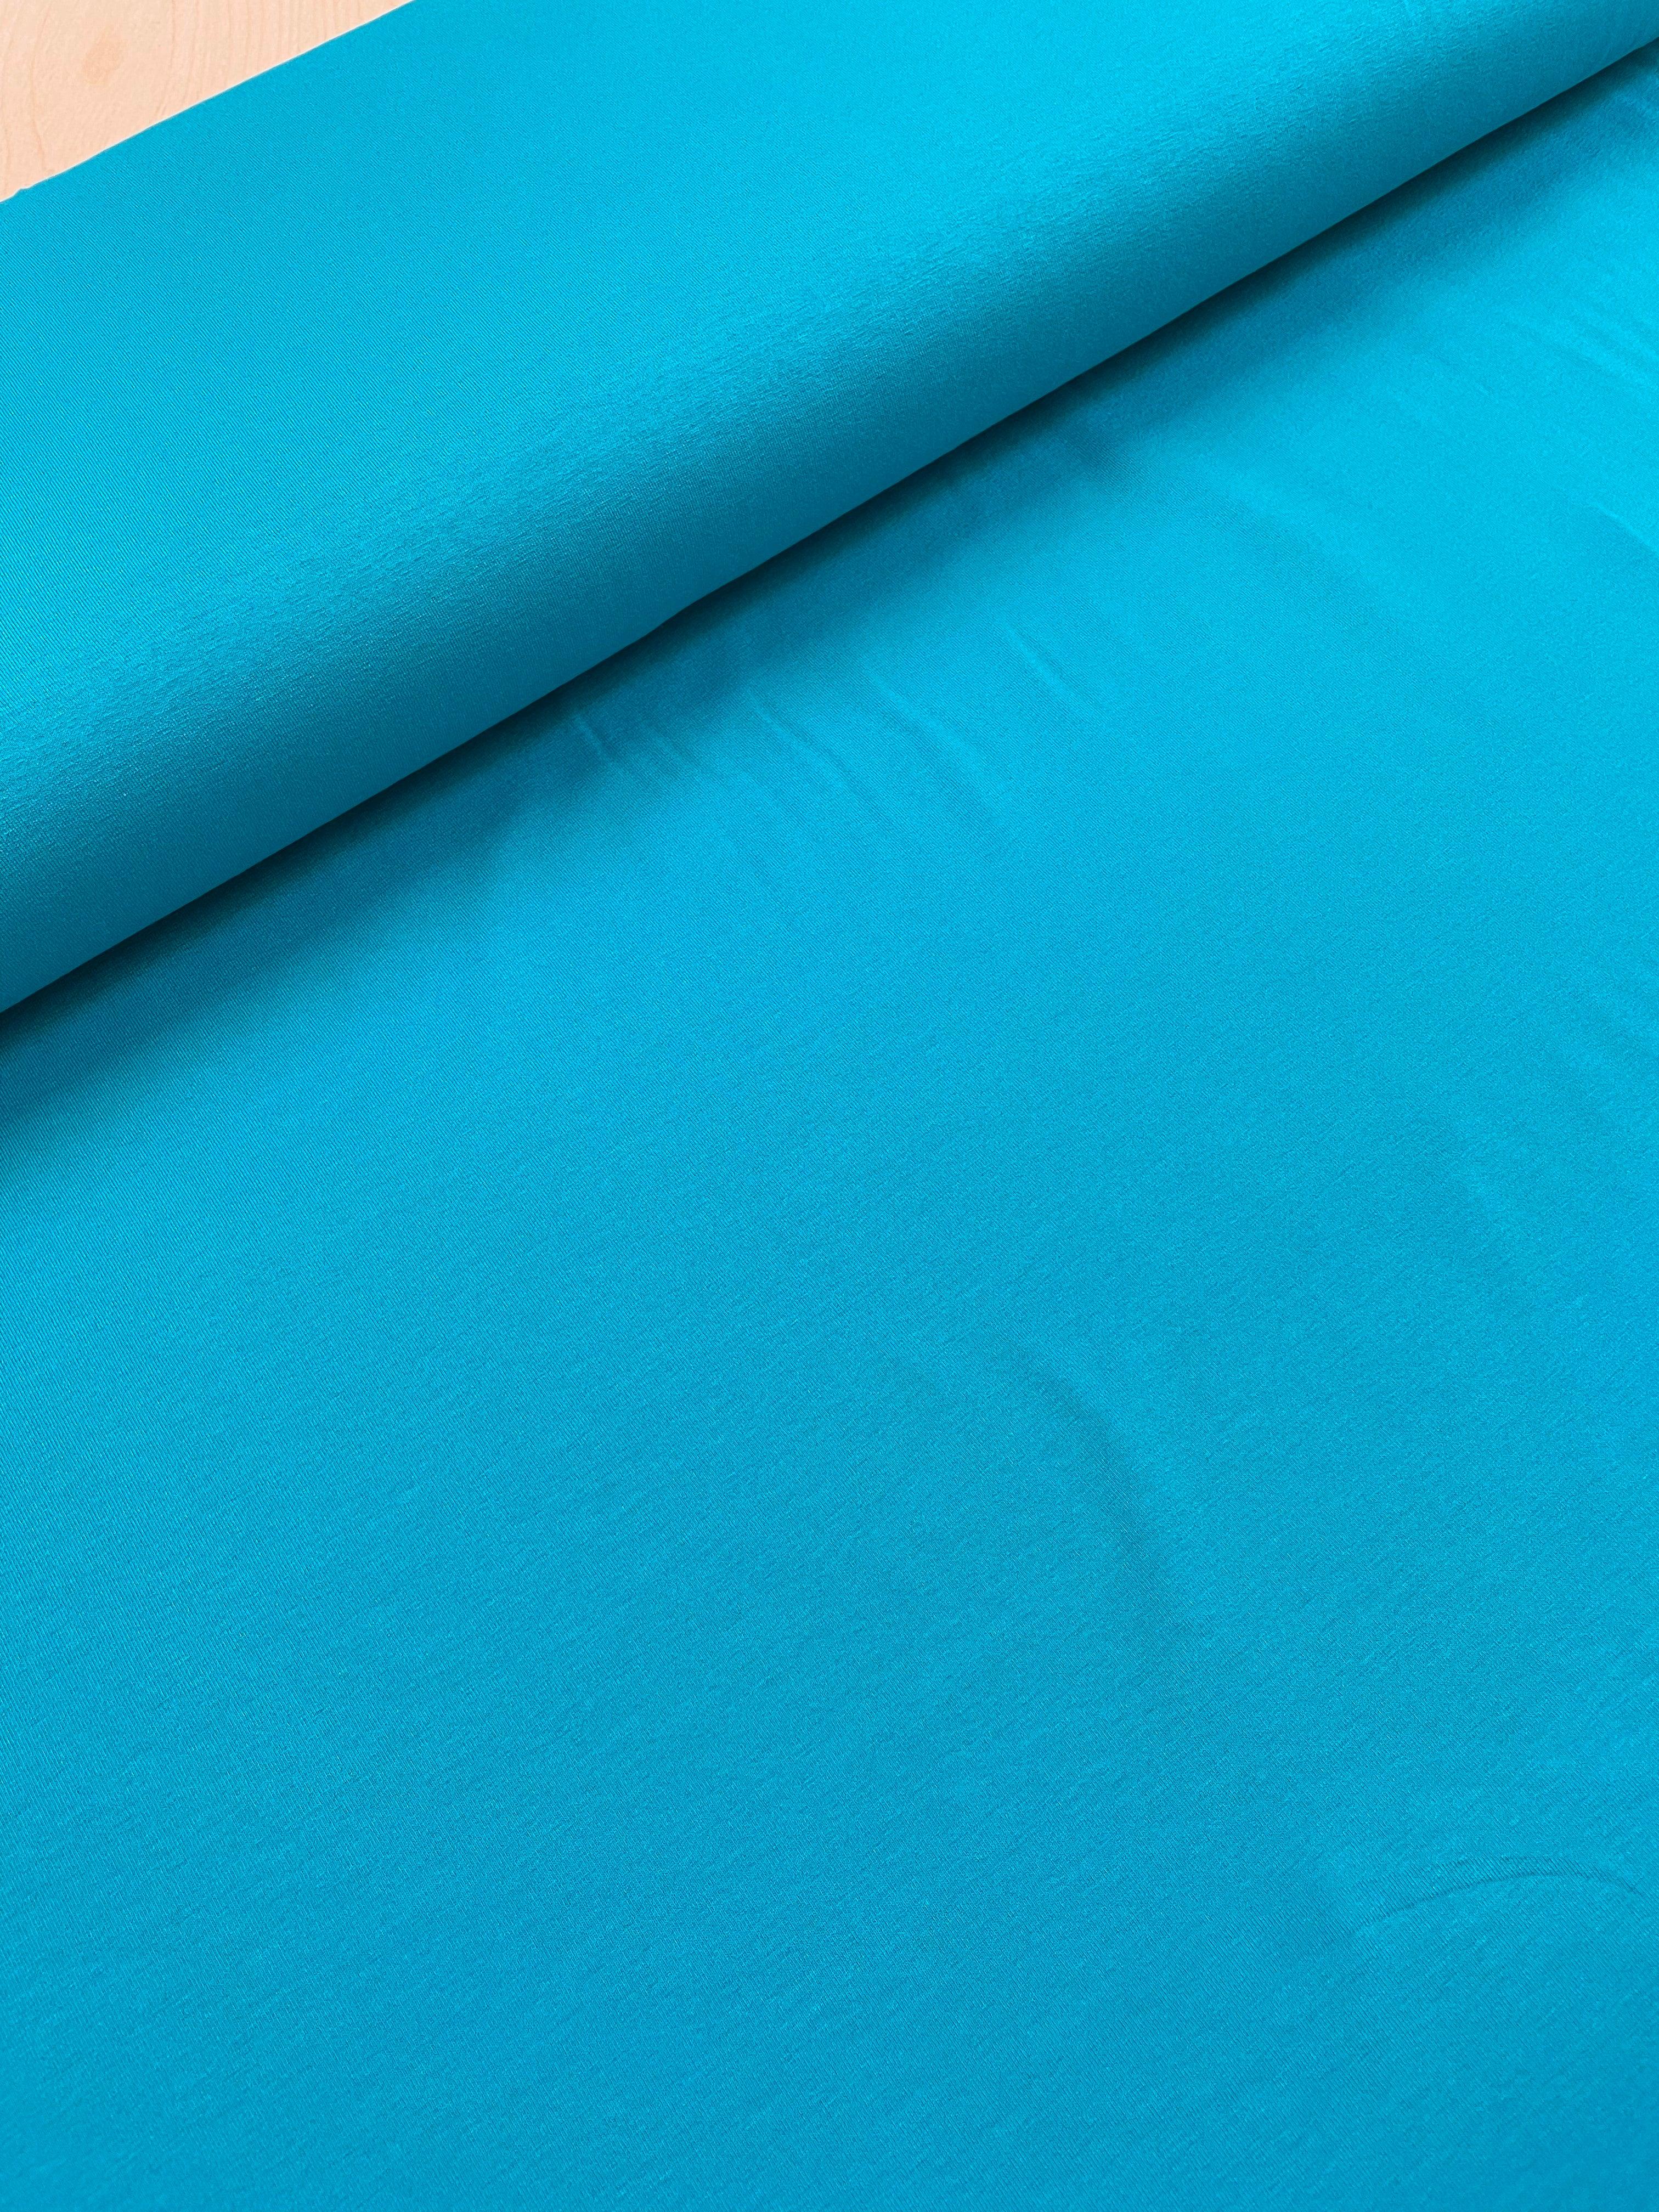 Turquoise Viscose Jersey Fabric